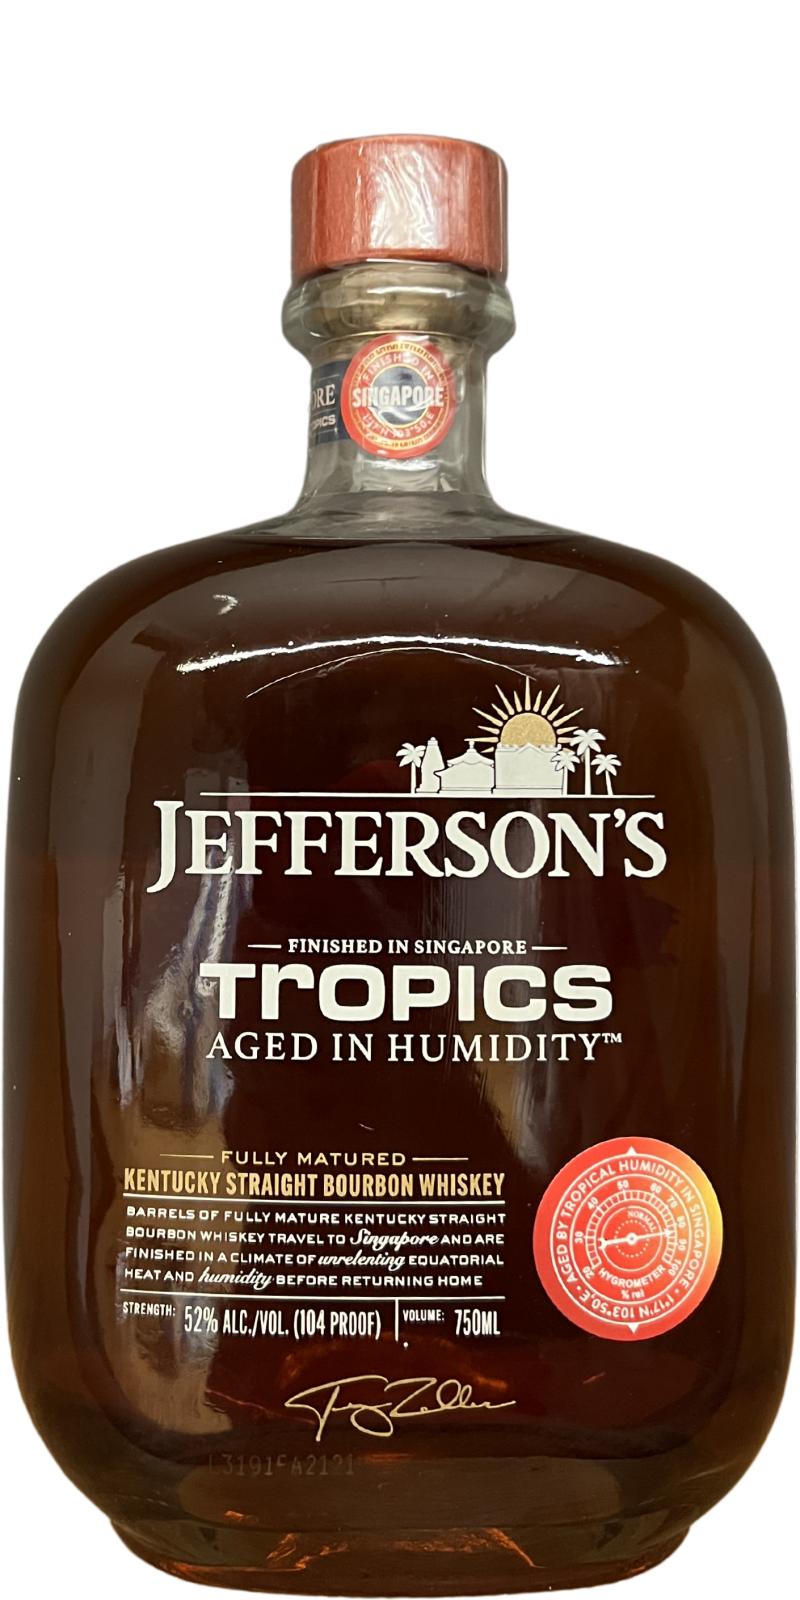 Jefferson's Tropics Kentucky Straight Bourbon Whiskey